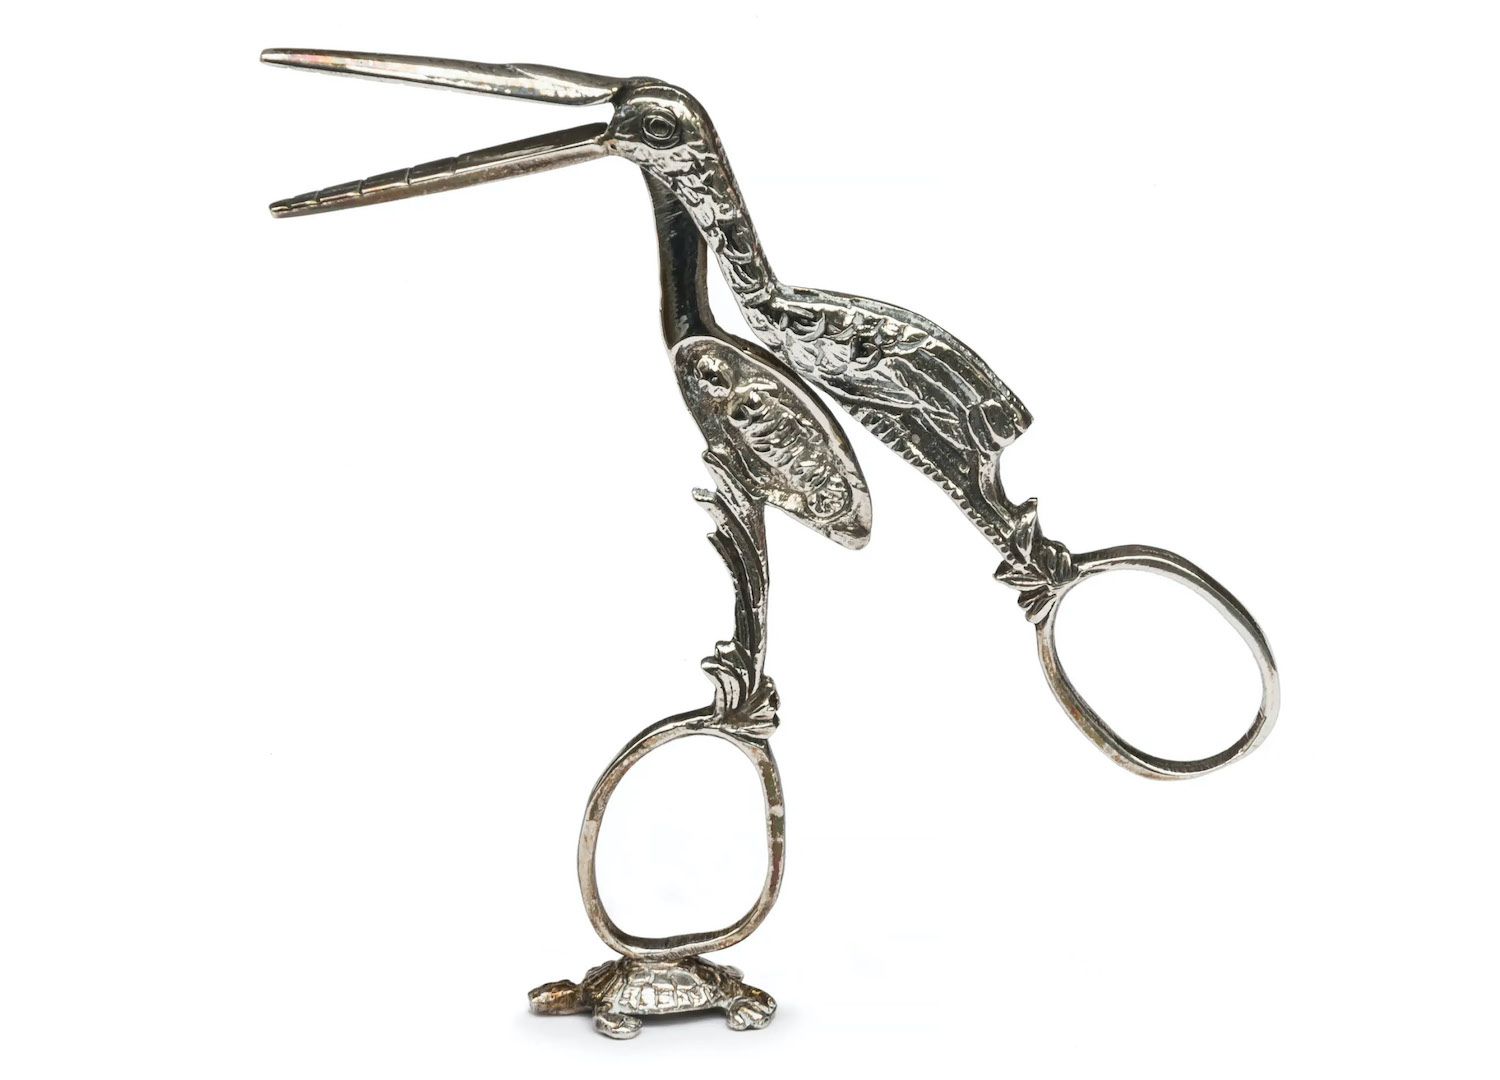 Decorative Pair of Steel Stork Scissors for Needlework, 19th